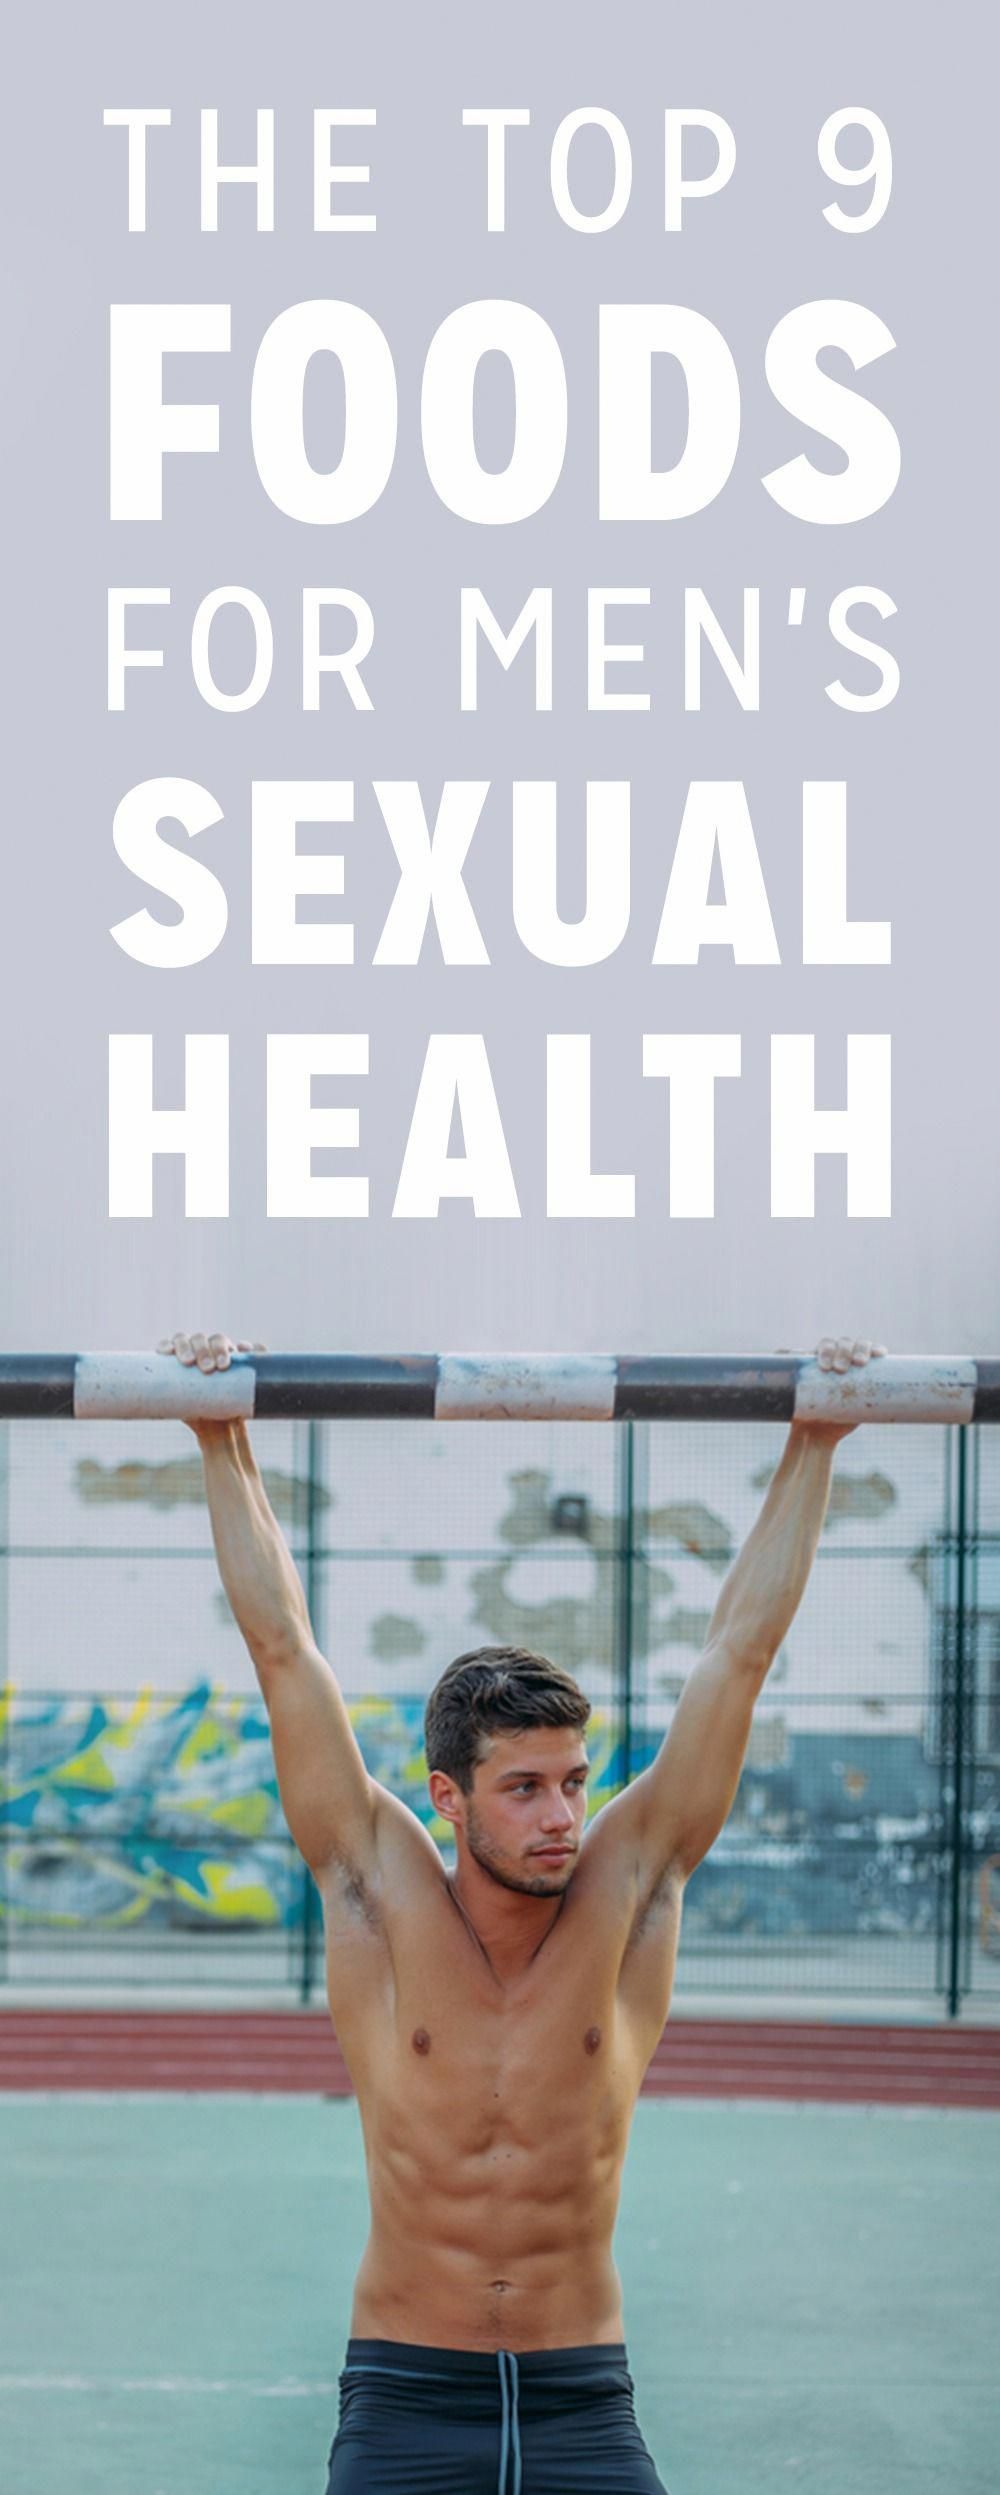 The Top 9 Foods for Men's Sexual Health | Livestrong.com - The Top 9 Foods for Men's Sexual Health | Livestrong.com -   16 fitness Men food ideas